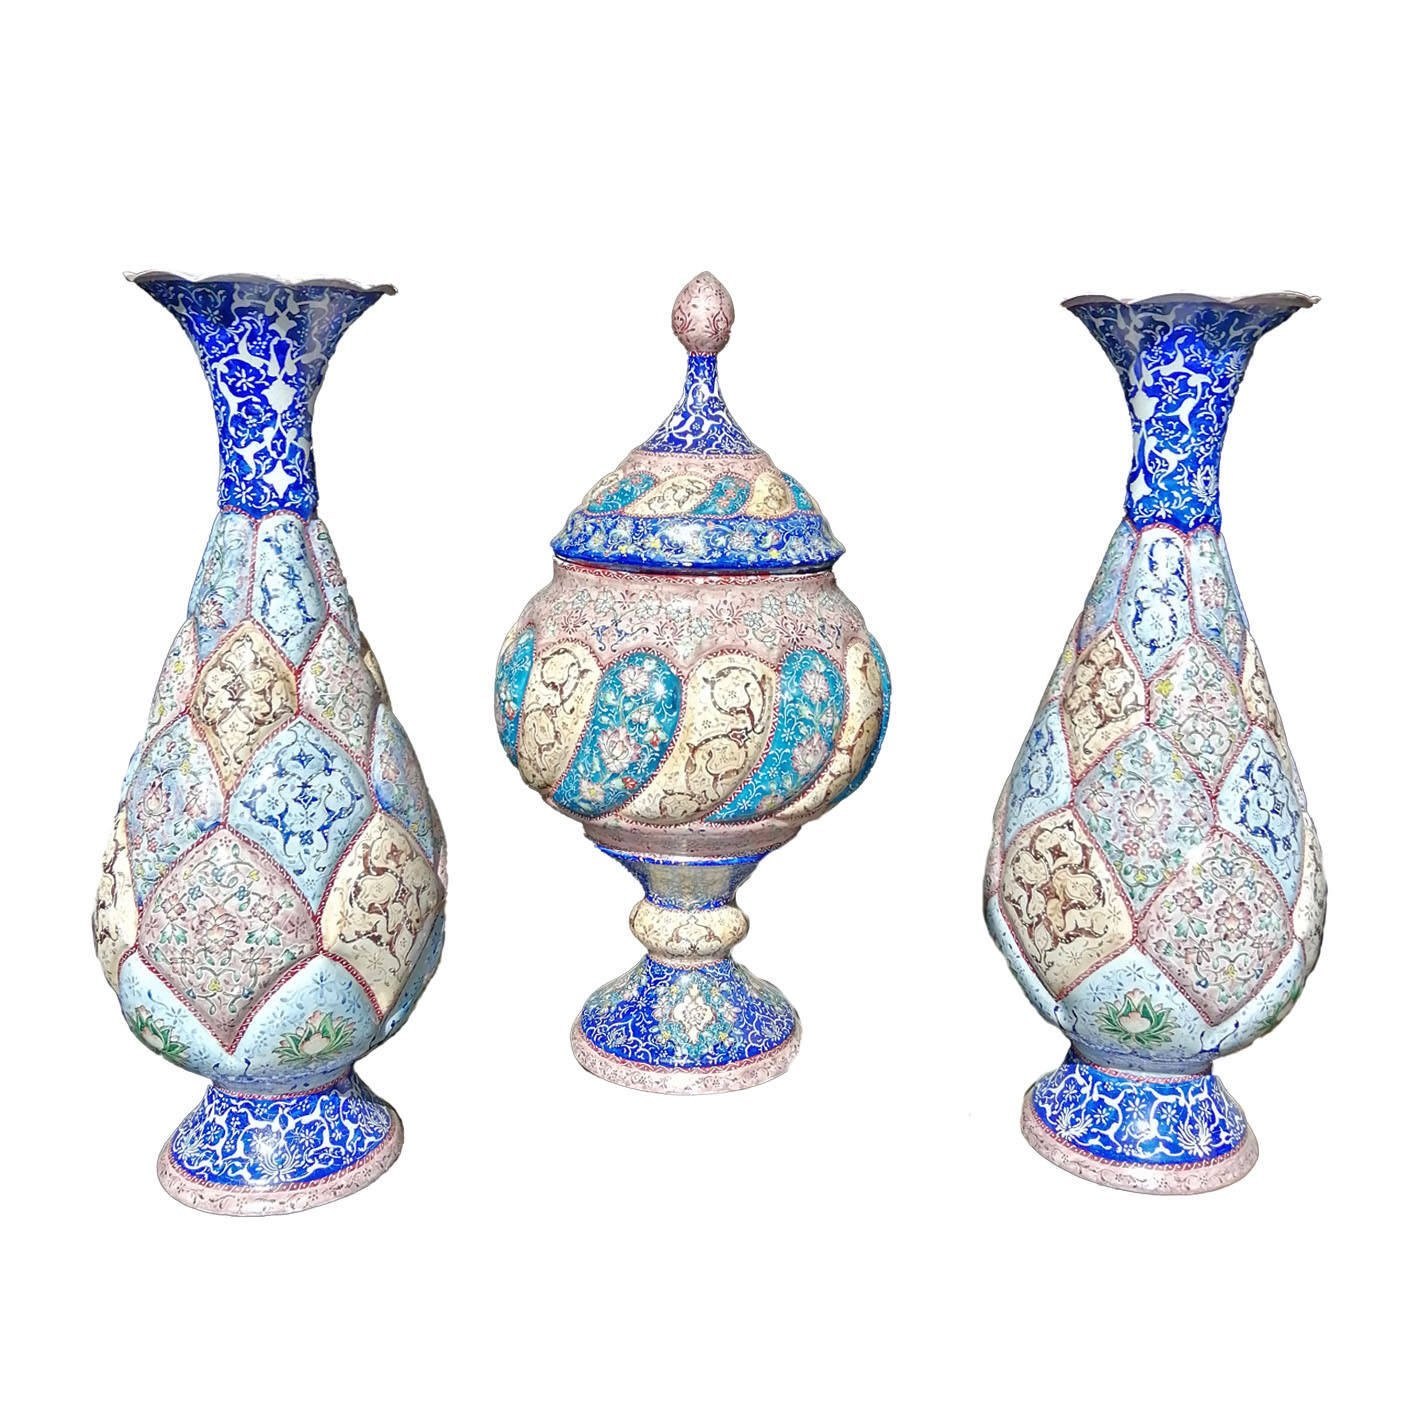 Enamel Handicraft Copper pot and container design Naghsh Aseman, व्यंजन, सजावट प्लेट, सजावट के बर्तन, सजावट के बर्तन, सजावट के बर्तन, सजावट की प्लेटें खरीदते हैं